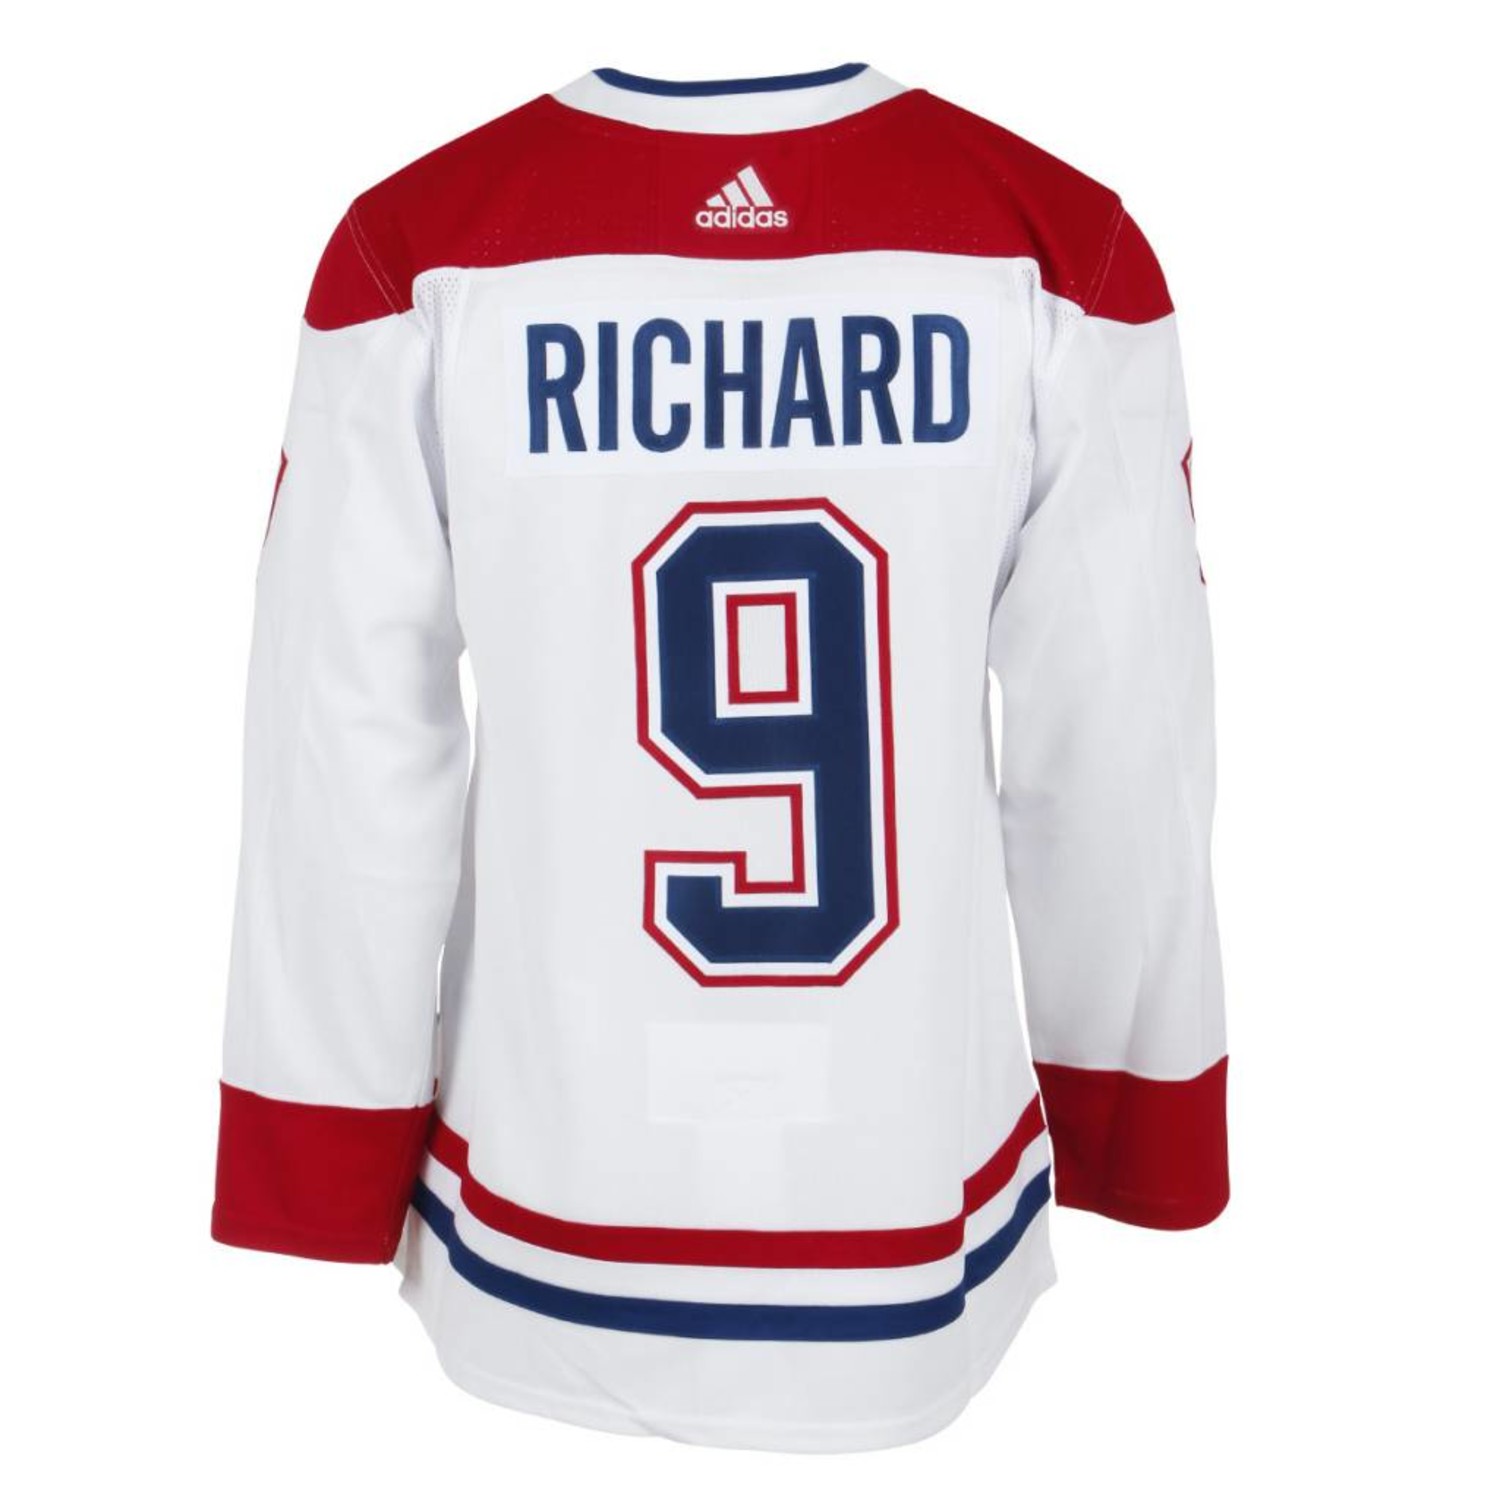 maurice richard jersey number